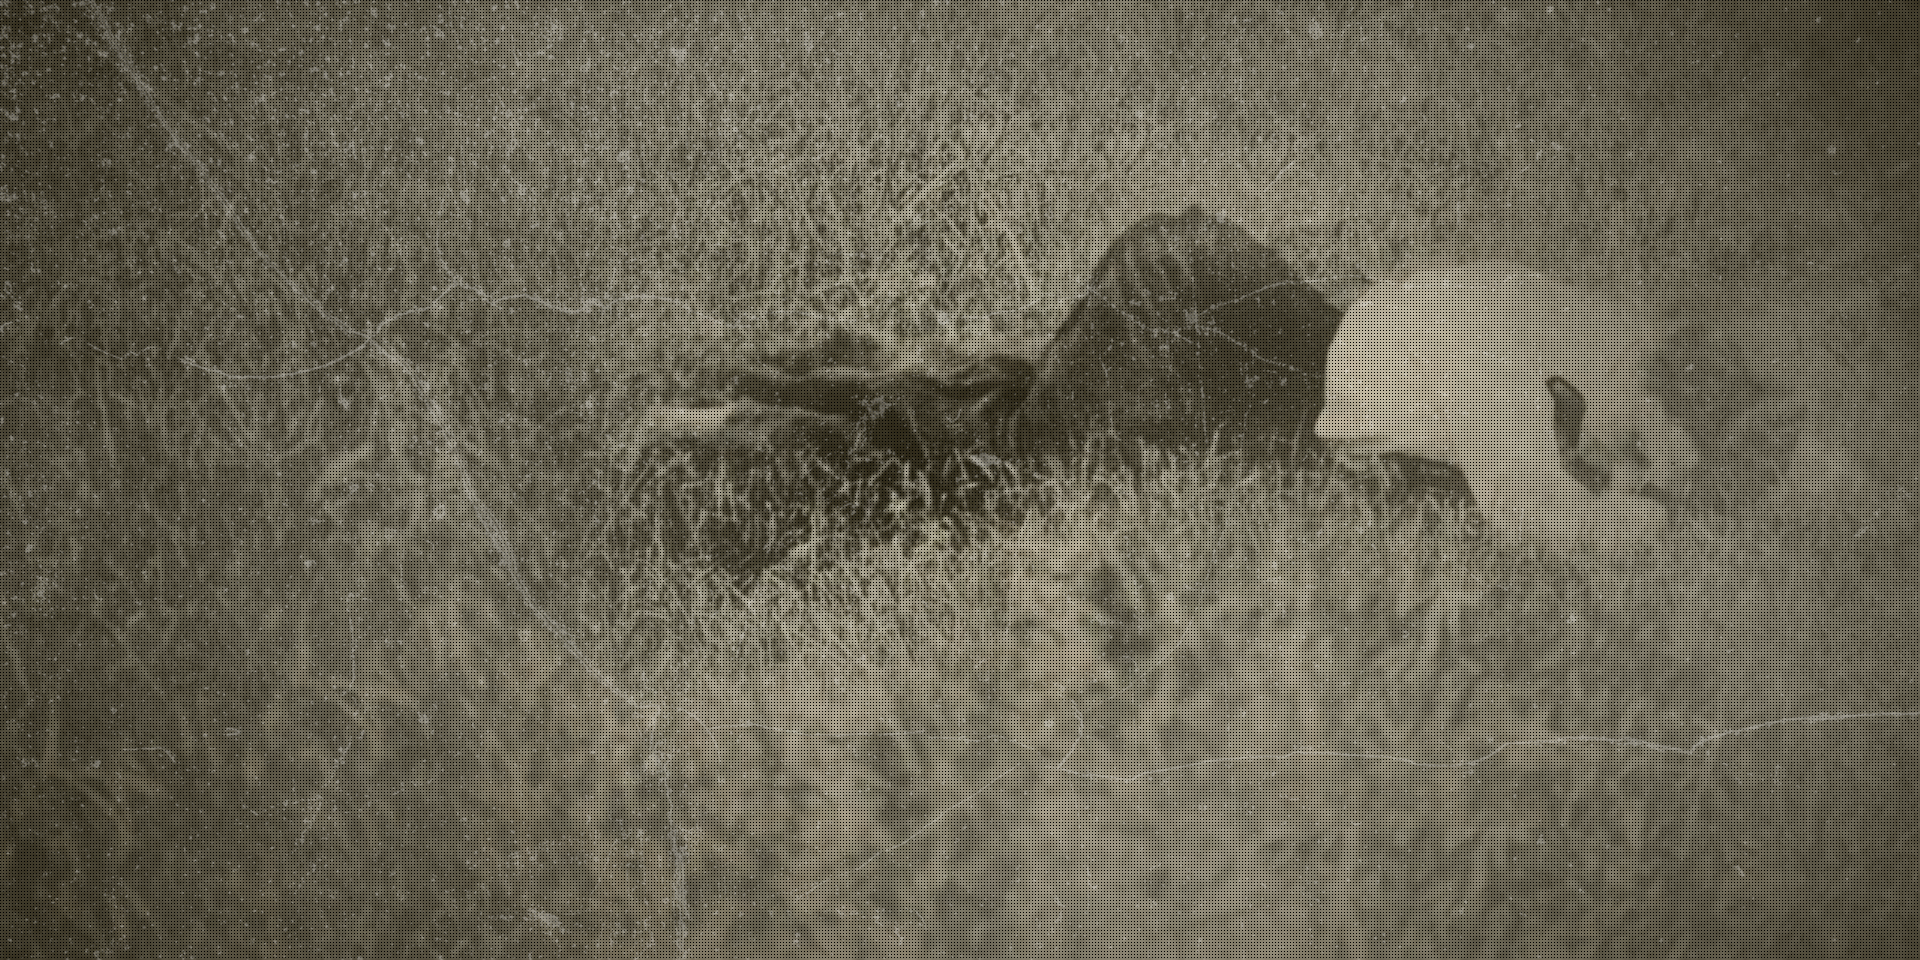 The Shocking Murder of Elizabeth Ann Holt (1890)